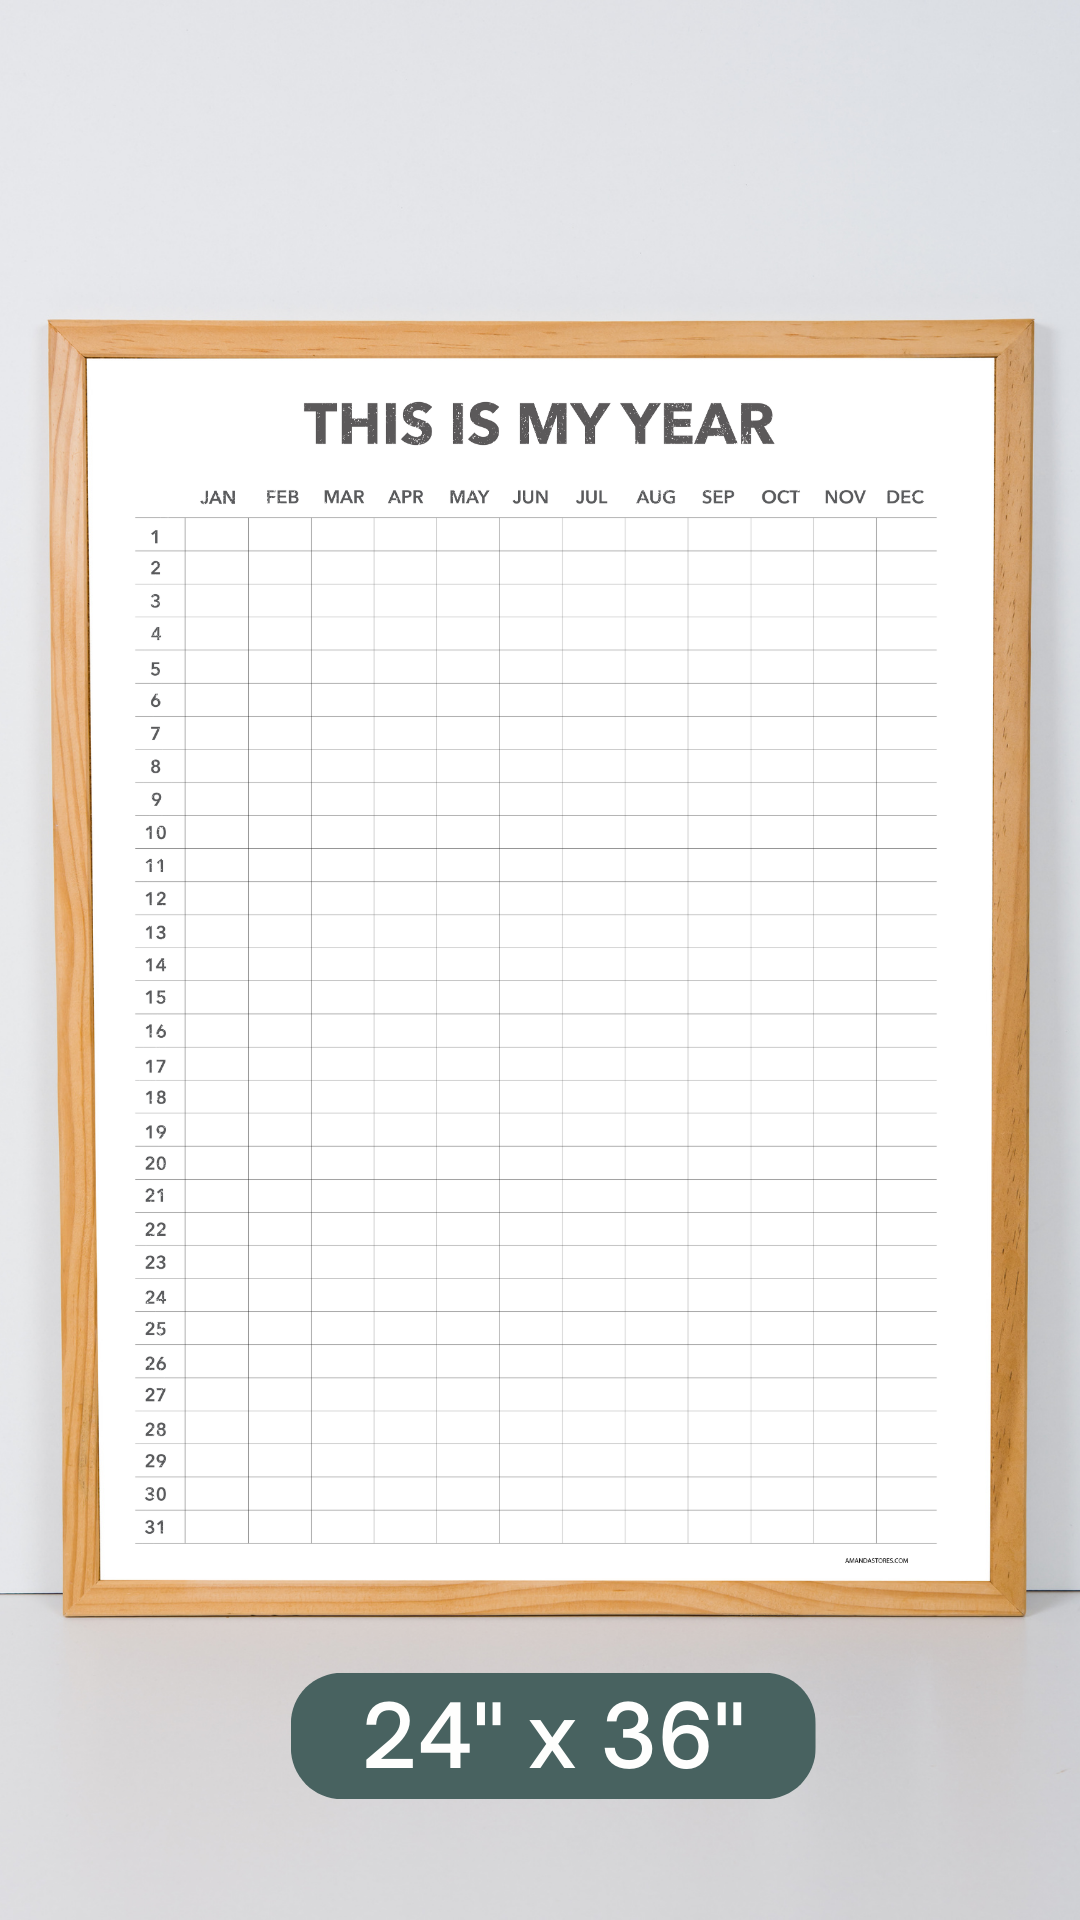 This is My Year - Reusable Wall Calendar - DIGITAL COPY